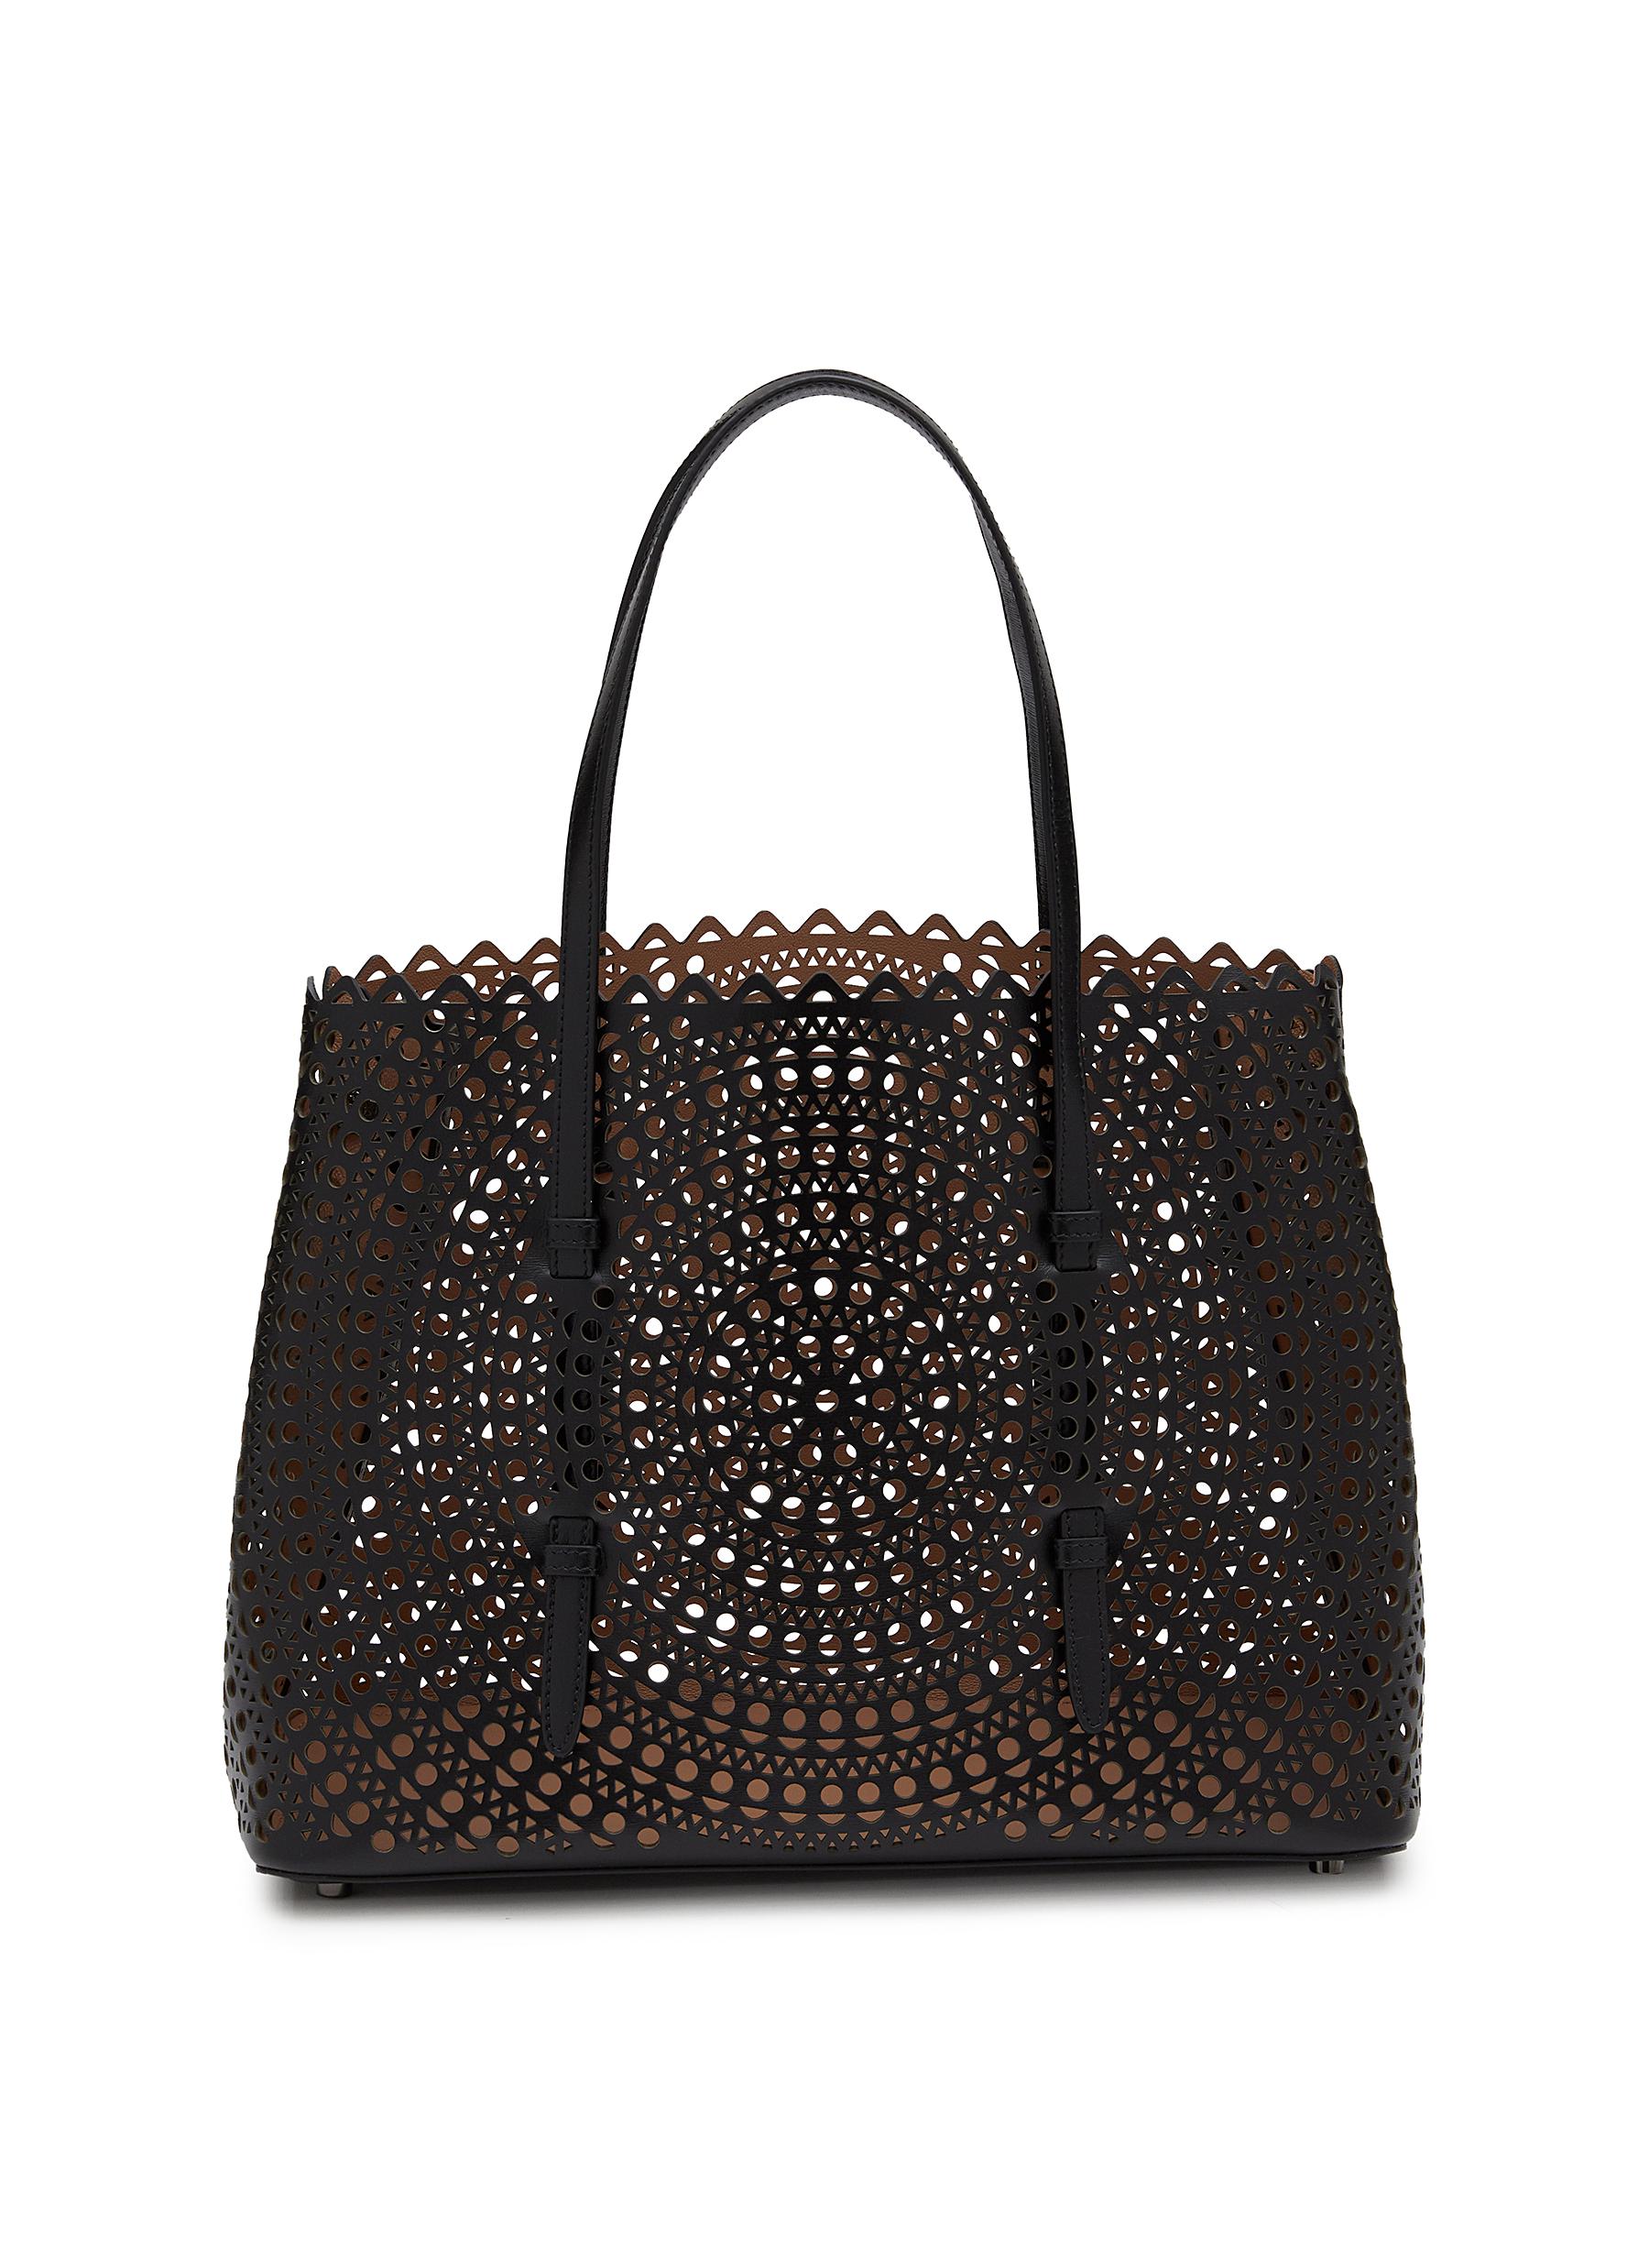 ALAÏA Mina 32 Perforated Leather Tote Bag